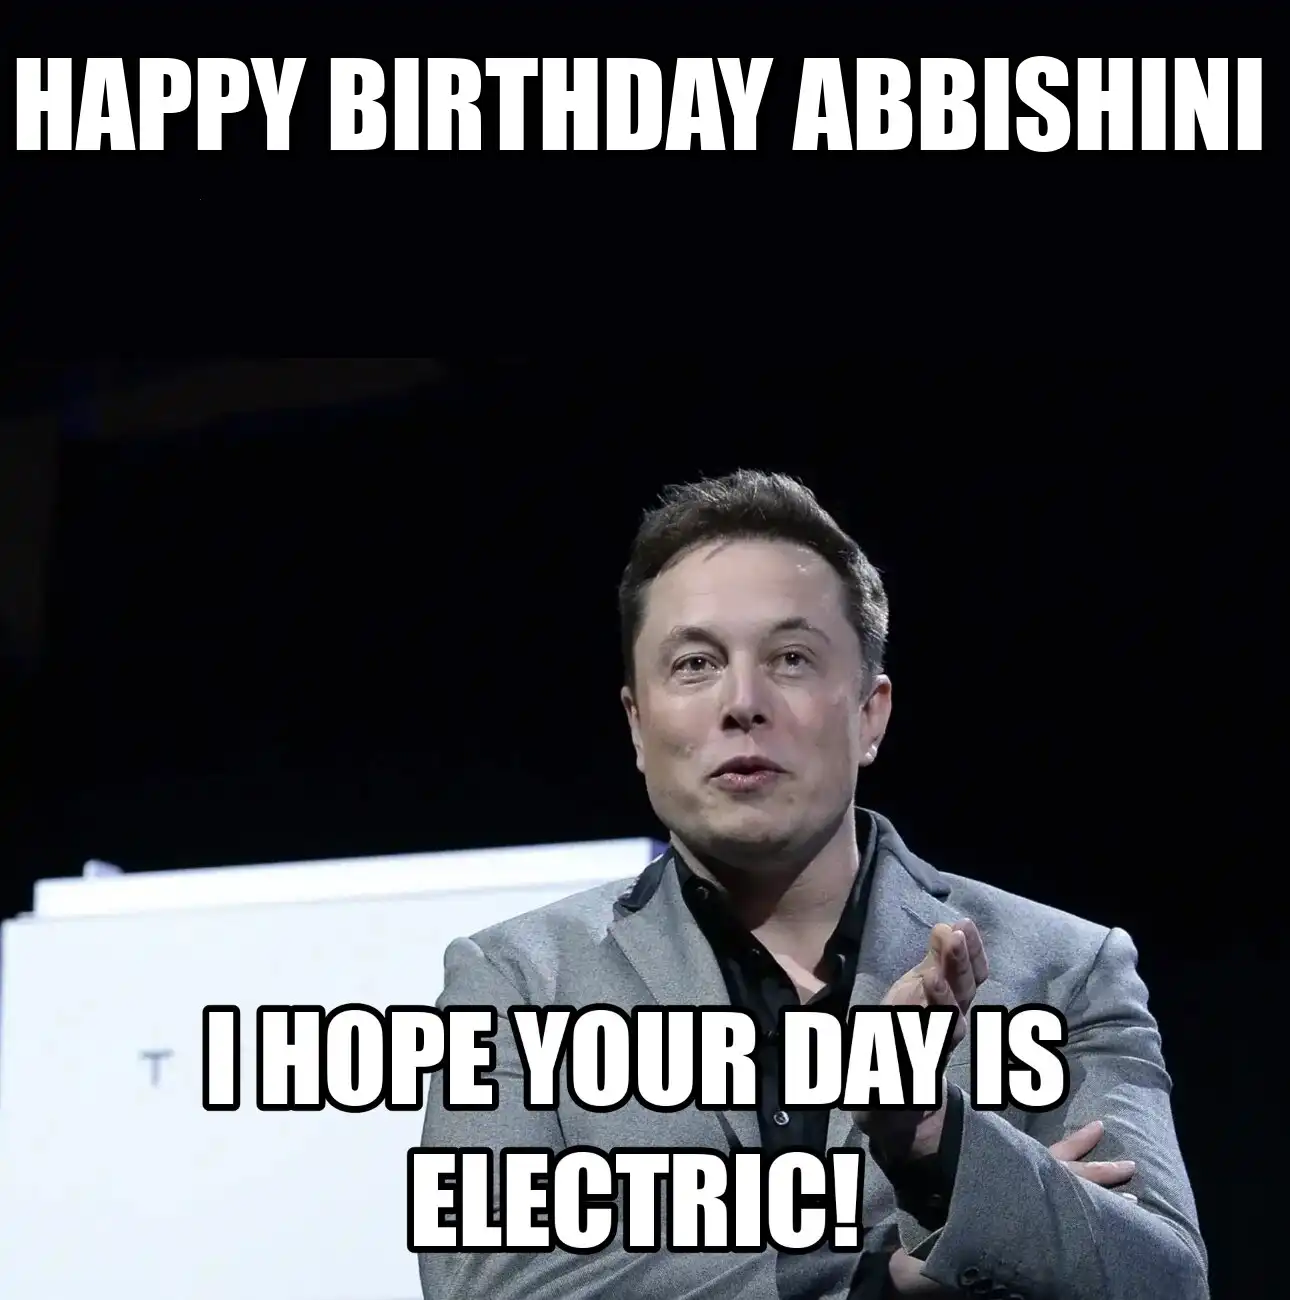 Happy Birthday Abbishini I Hope Your Day Is Electric Meme